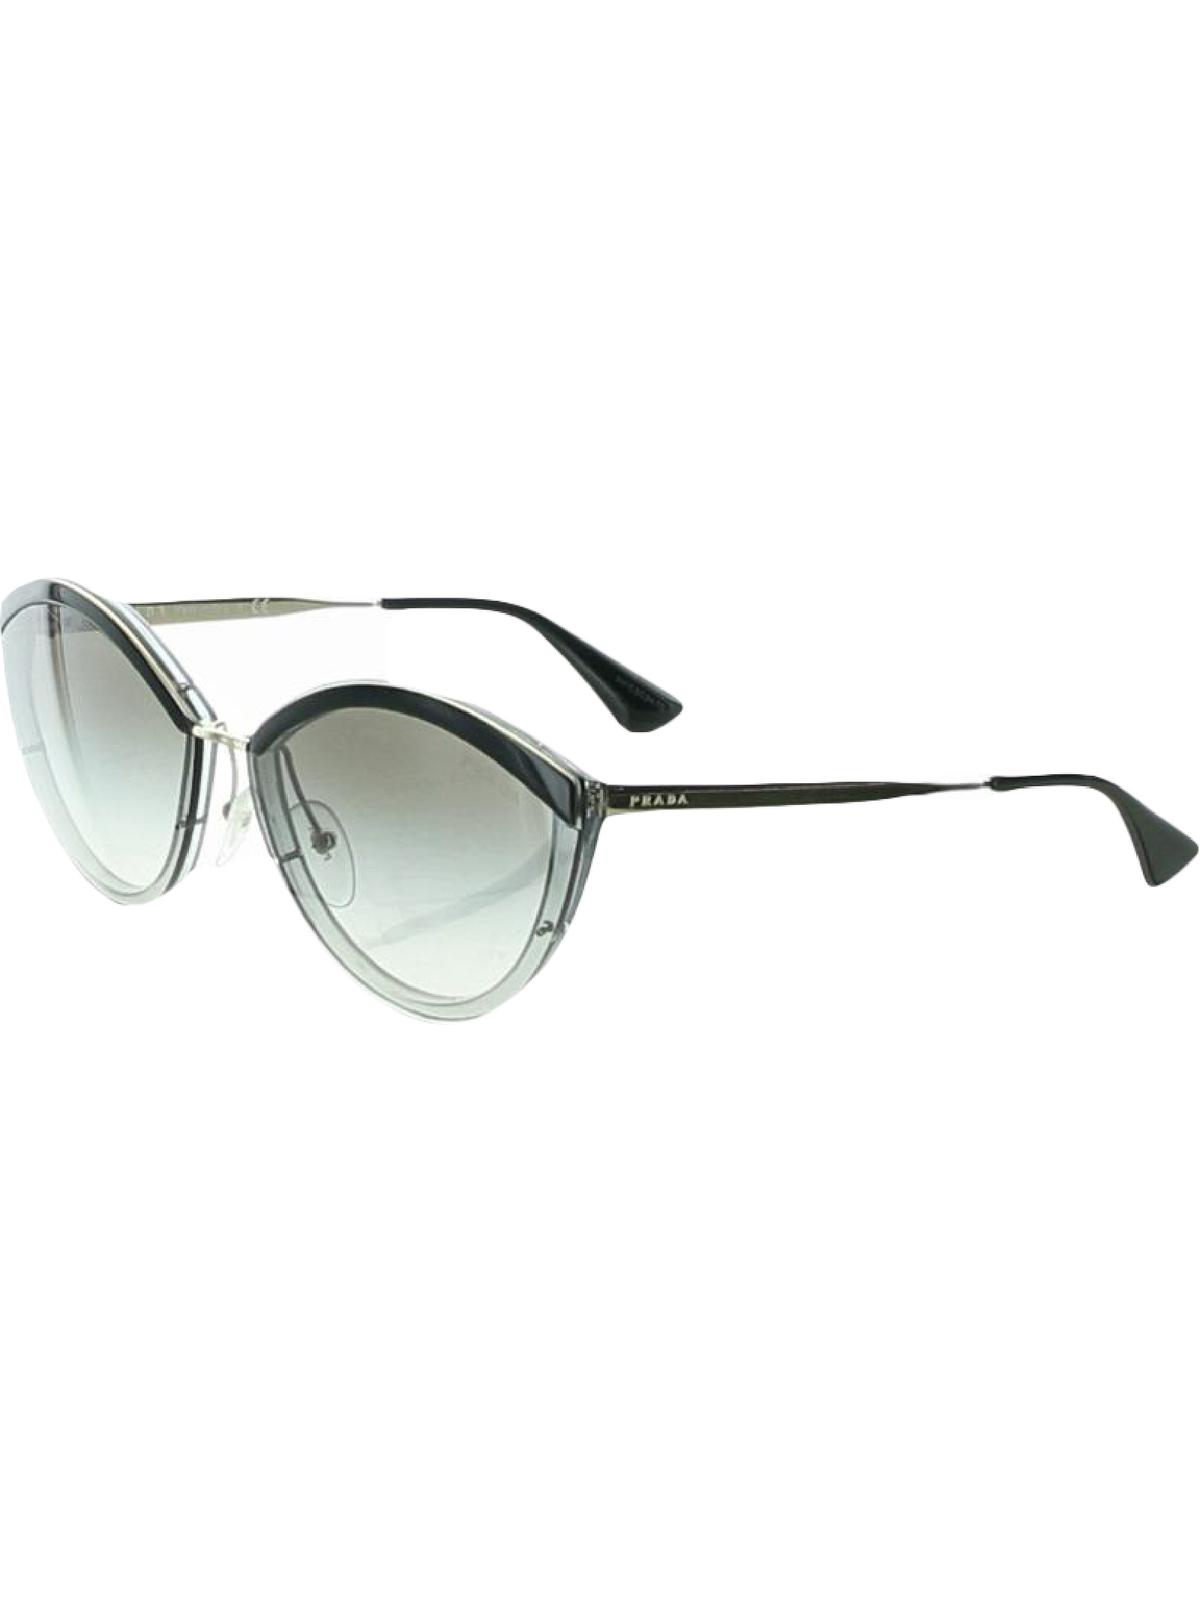 Prada Womens UV Protection Round Cat Eye Fashion Sunglasses Gray 63mm - image 1 of 3